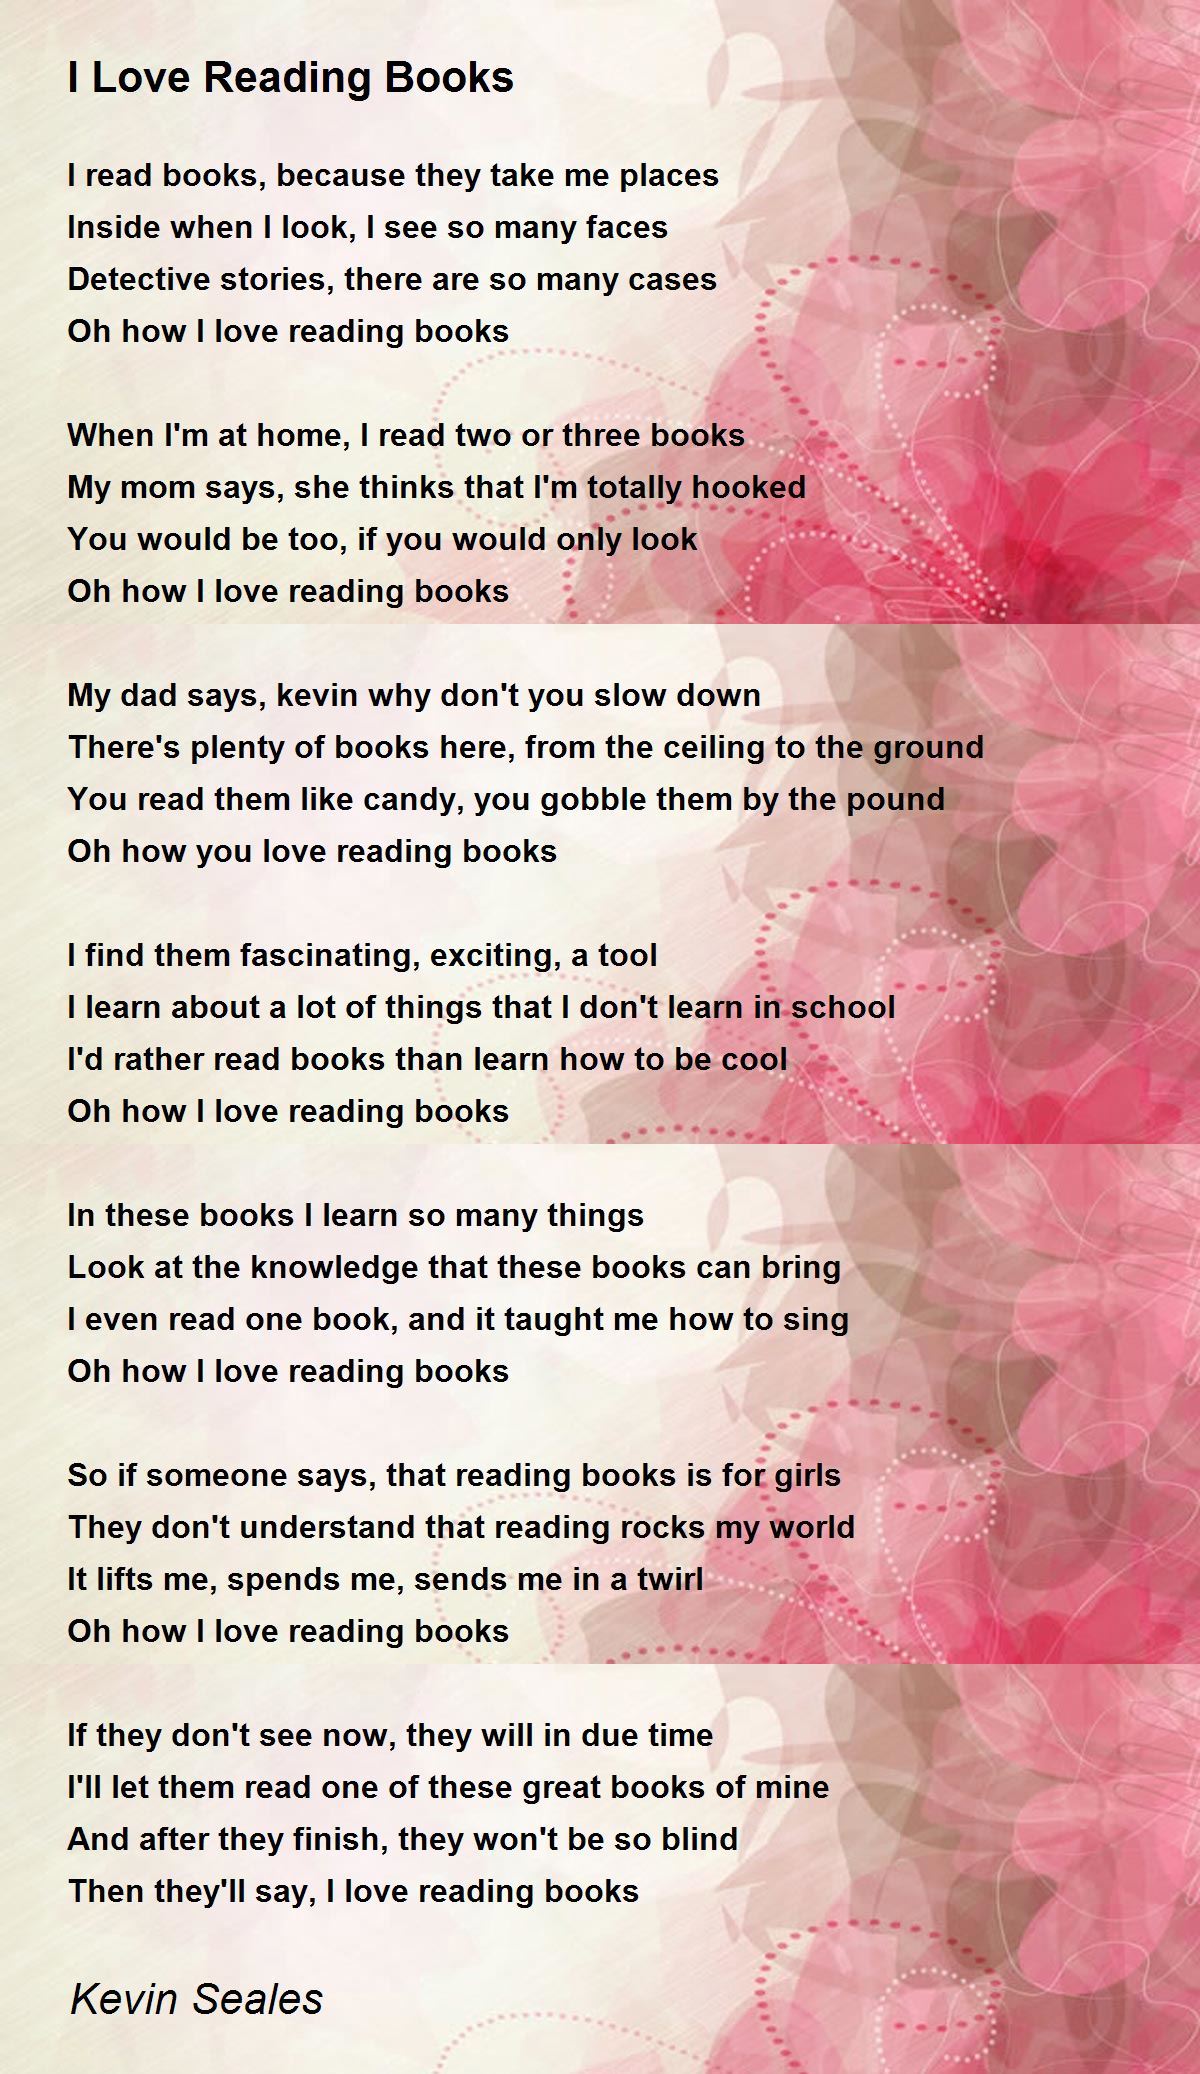 I Love Reading Books Poem by Kevin Seales - Poem Hunter